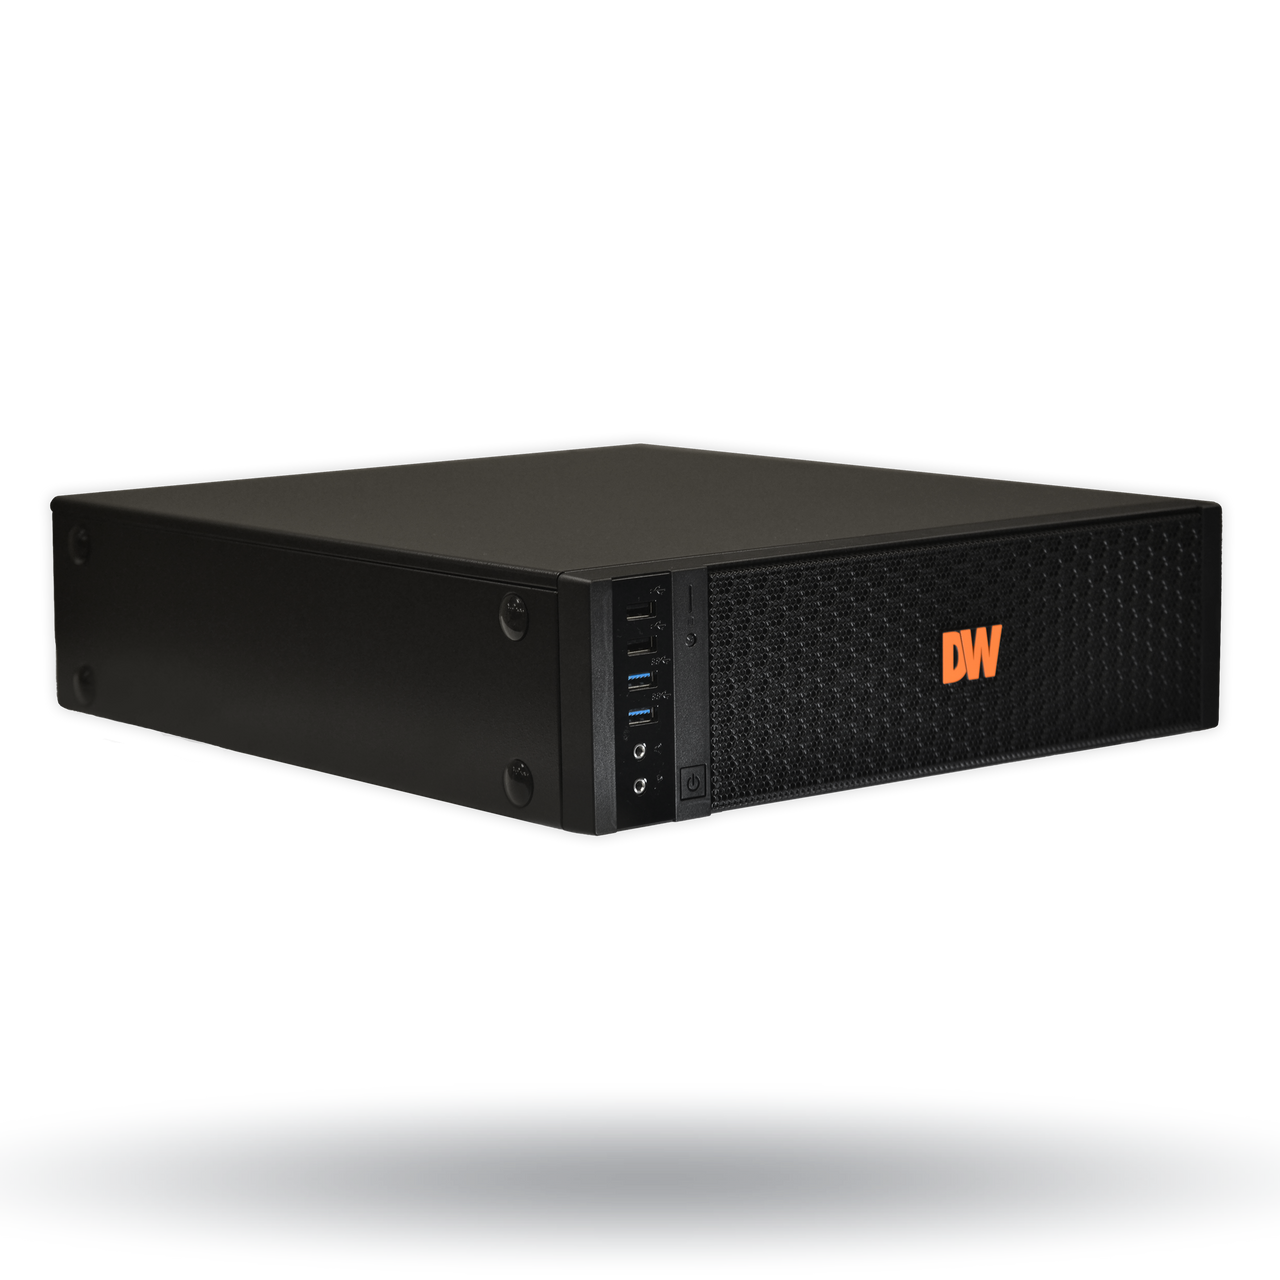 Digital Watchdog DW-BJDX5120T 360Mbps Desktop Video Server, i5 CPU, Windows 10 OS, 20TB HDD, NDAA Compliant